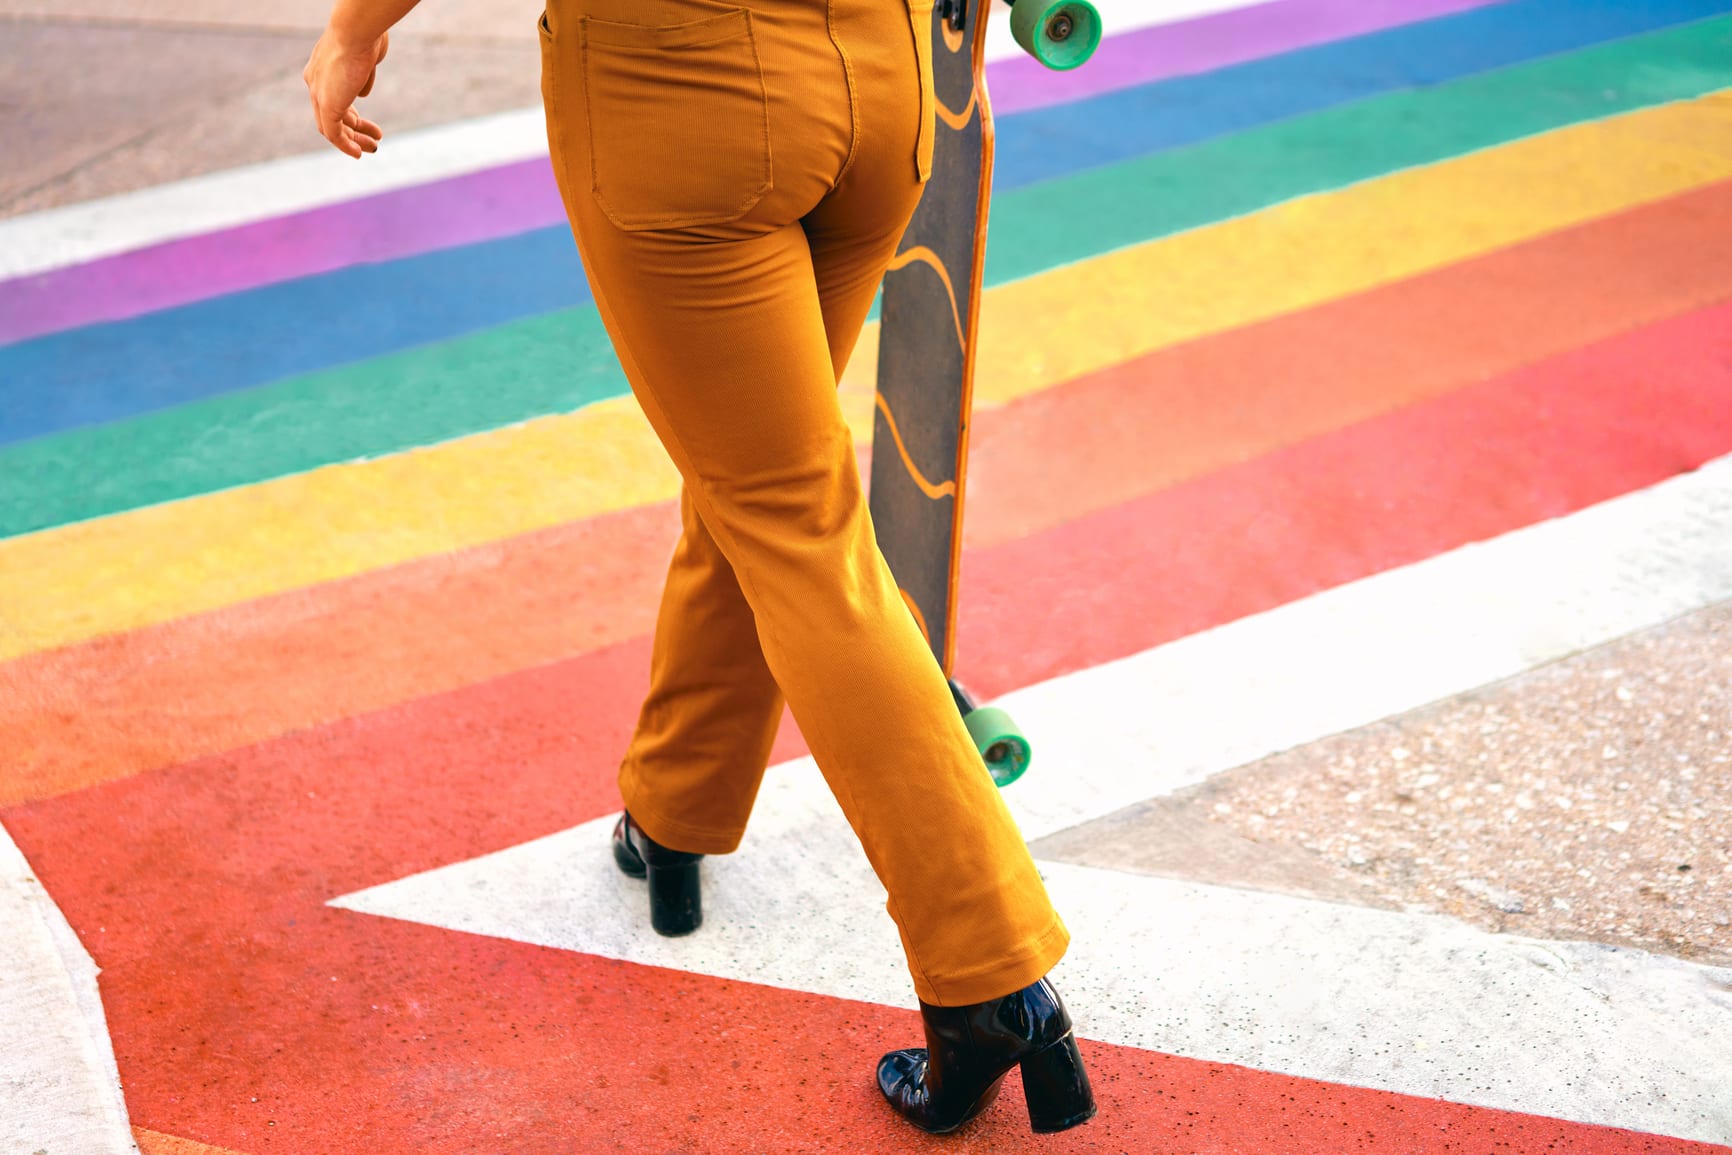 Stylish anonymous roller skater crossing a gay flag crosswalk in Dallas Texas.